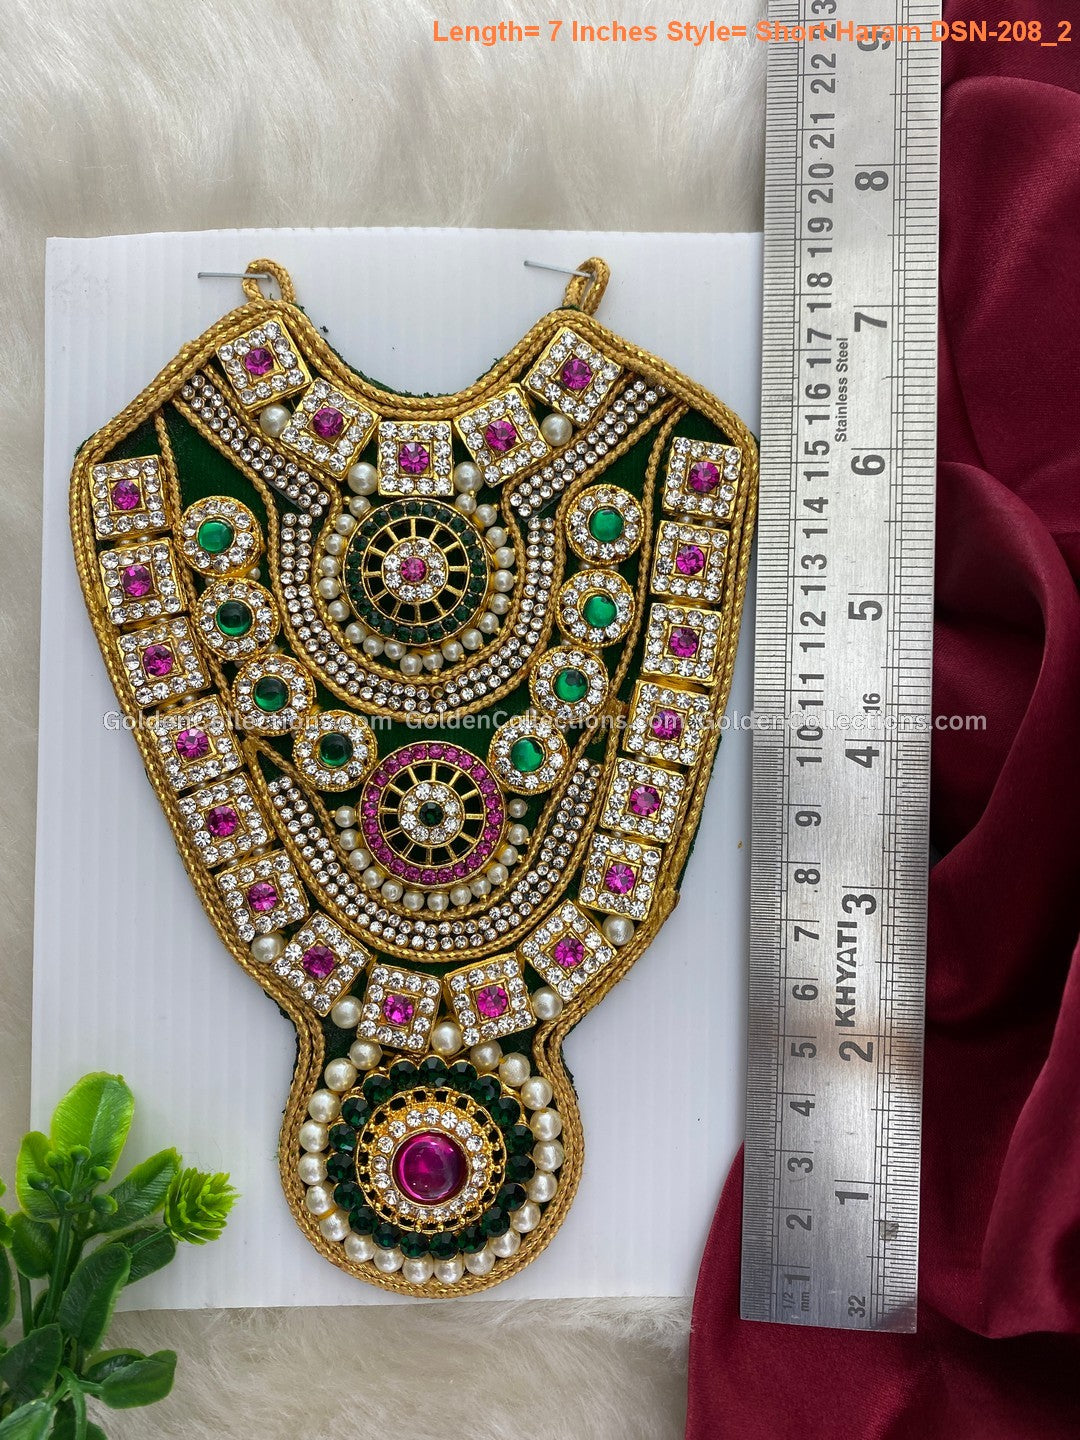 Traditional God Jewellery - Exclusive Amman Short Haram - DSN-208 2